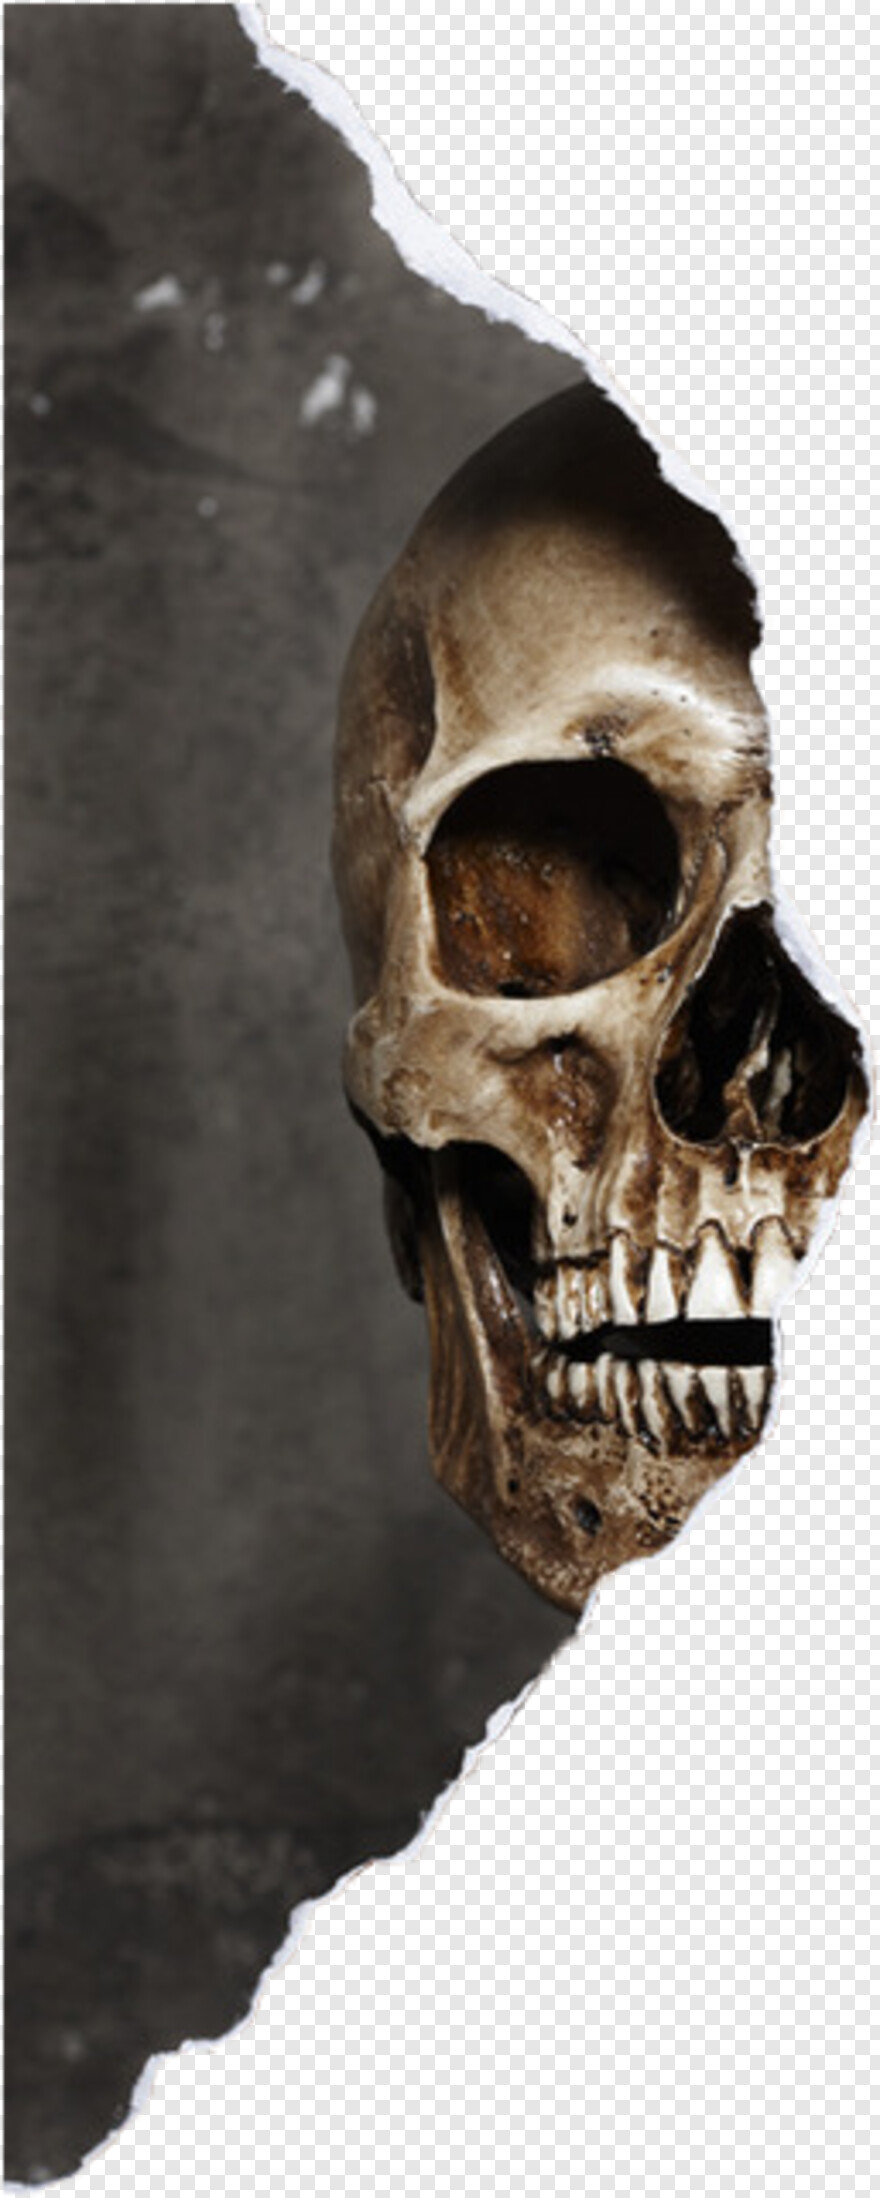  Skeleton Head, Skeleton Key, Skeleton Arm, Skeleton Hand, Skeleton, Face Silhouette